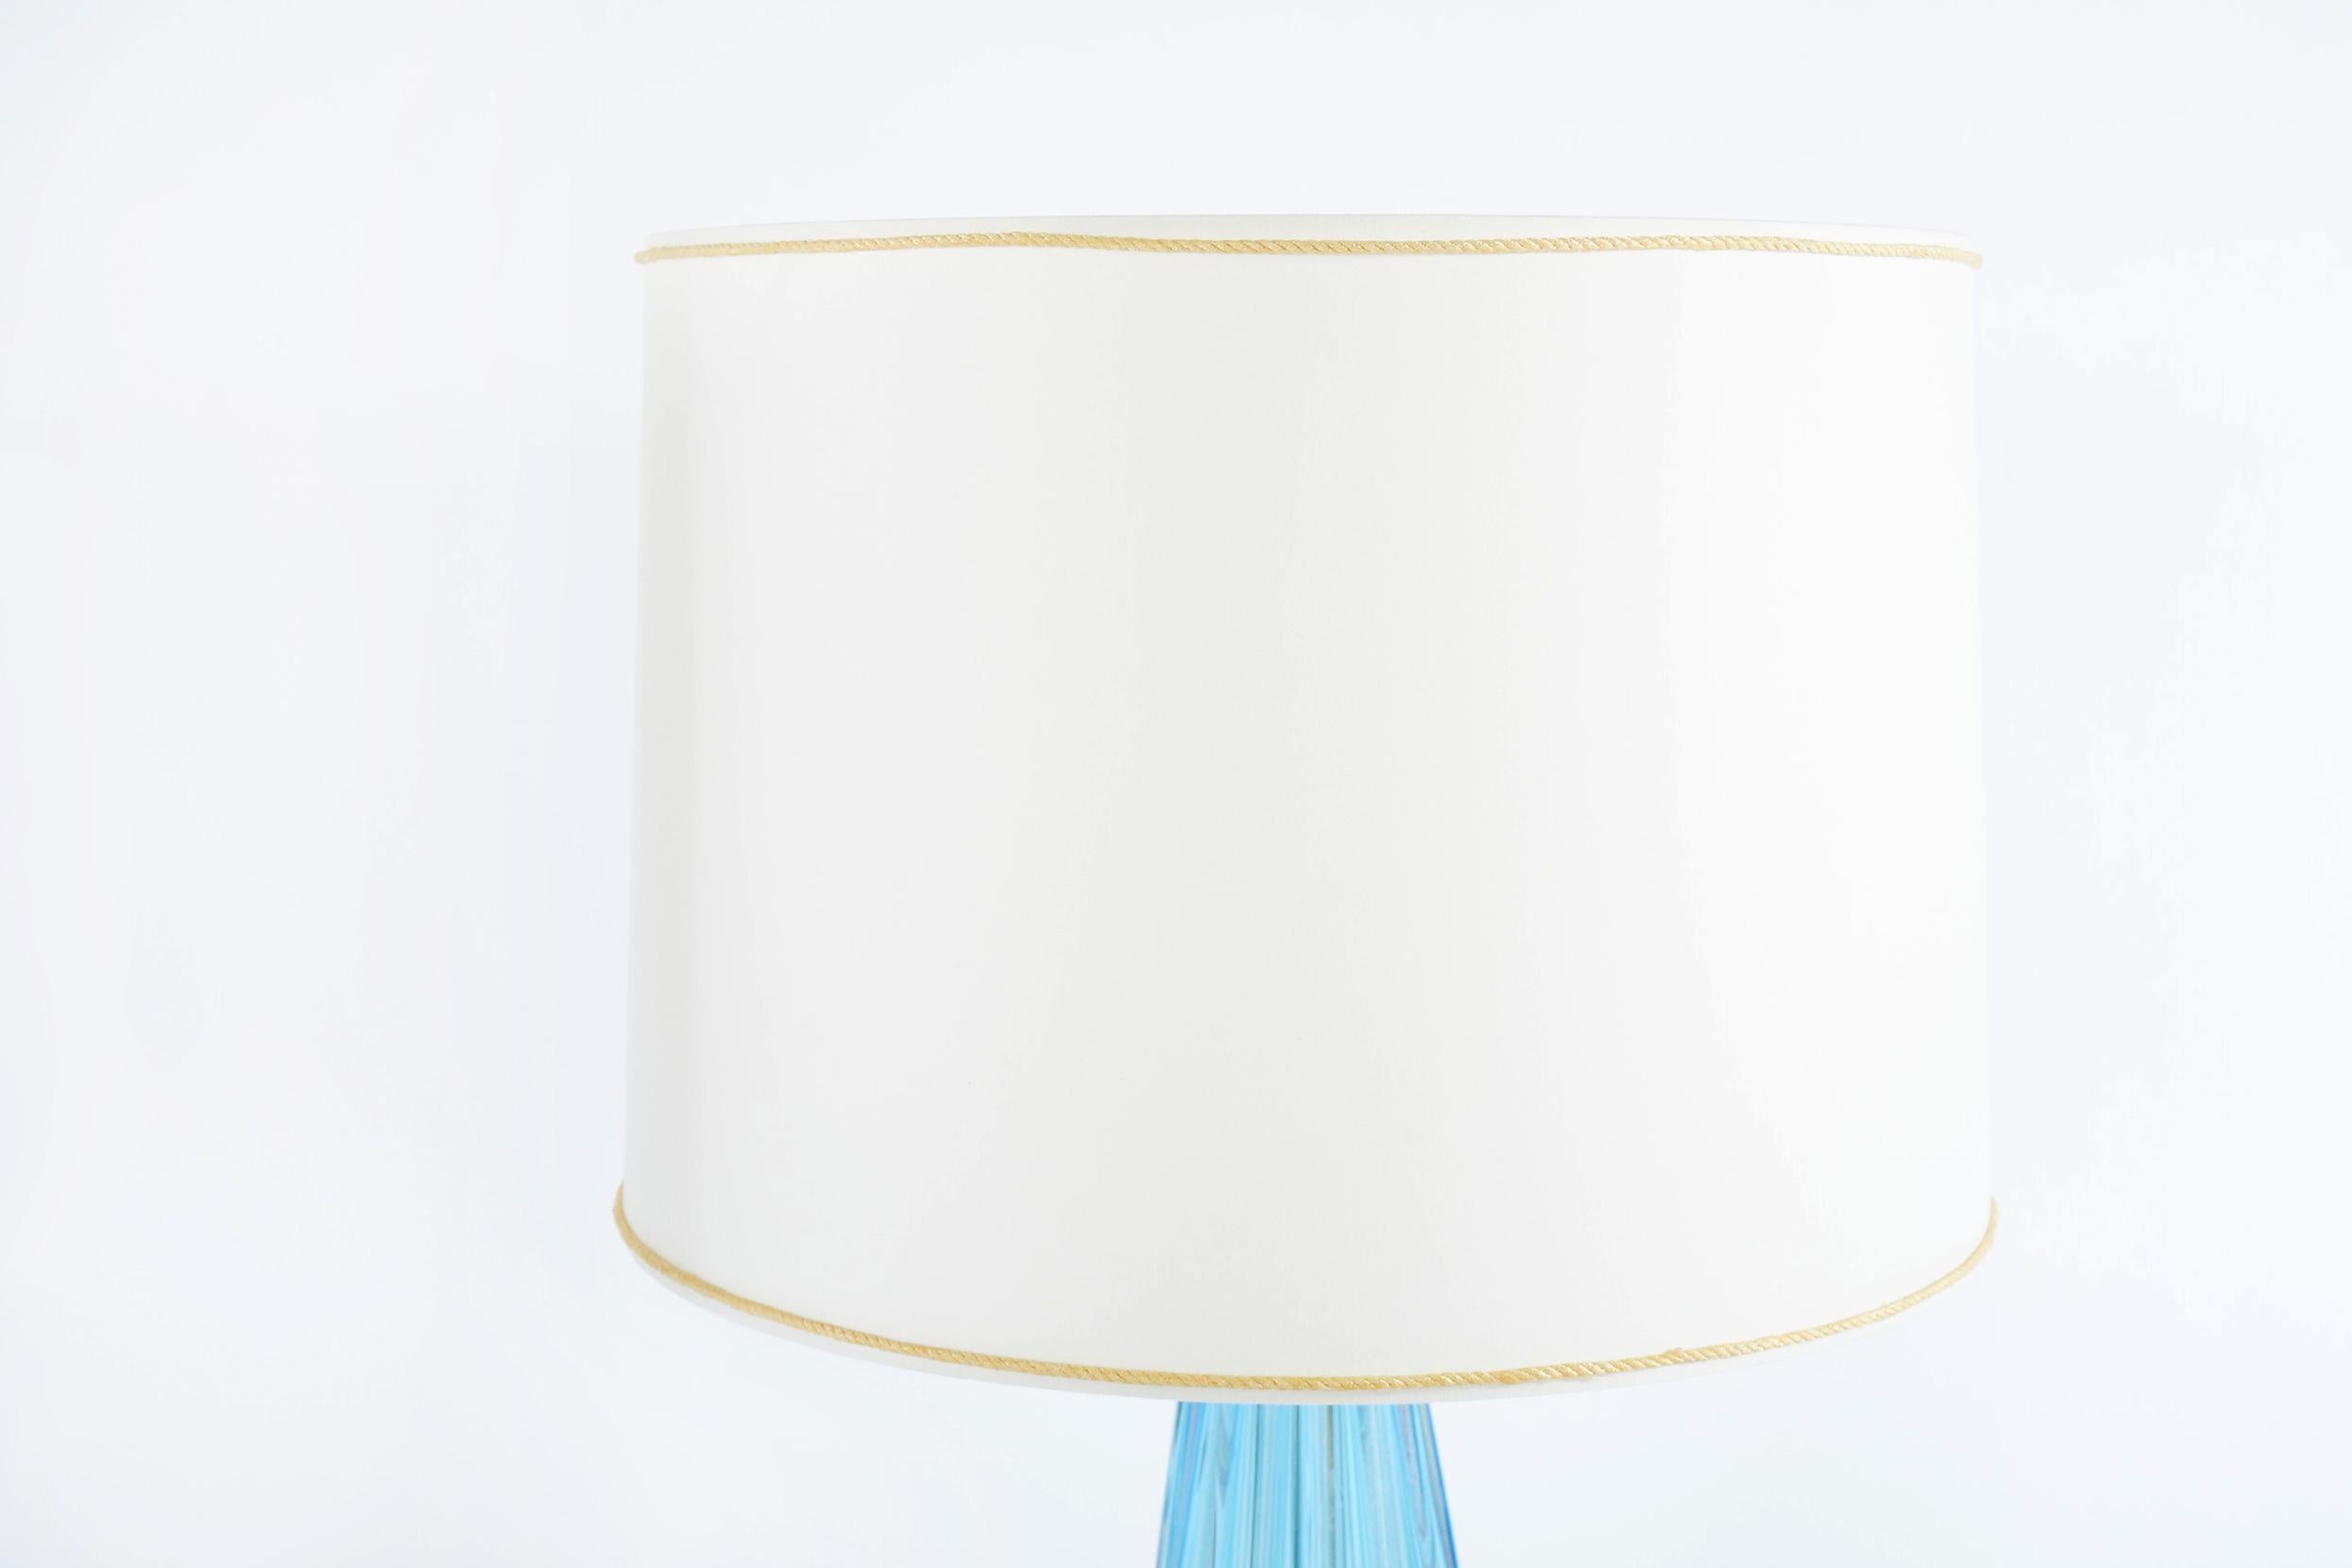 Gilt Exquisite Pair Venetian Glass / Gold Flecks Table Lamps